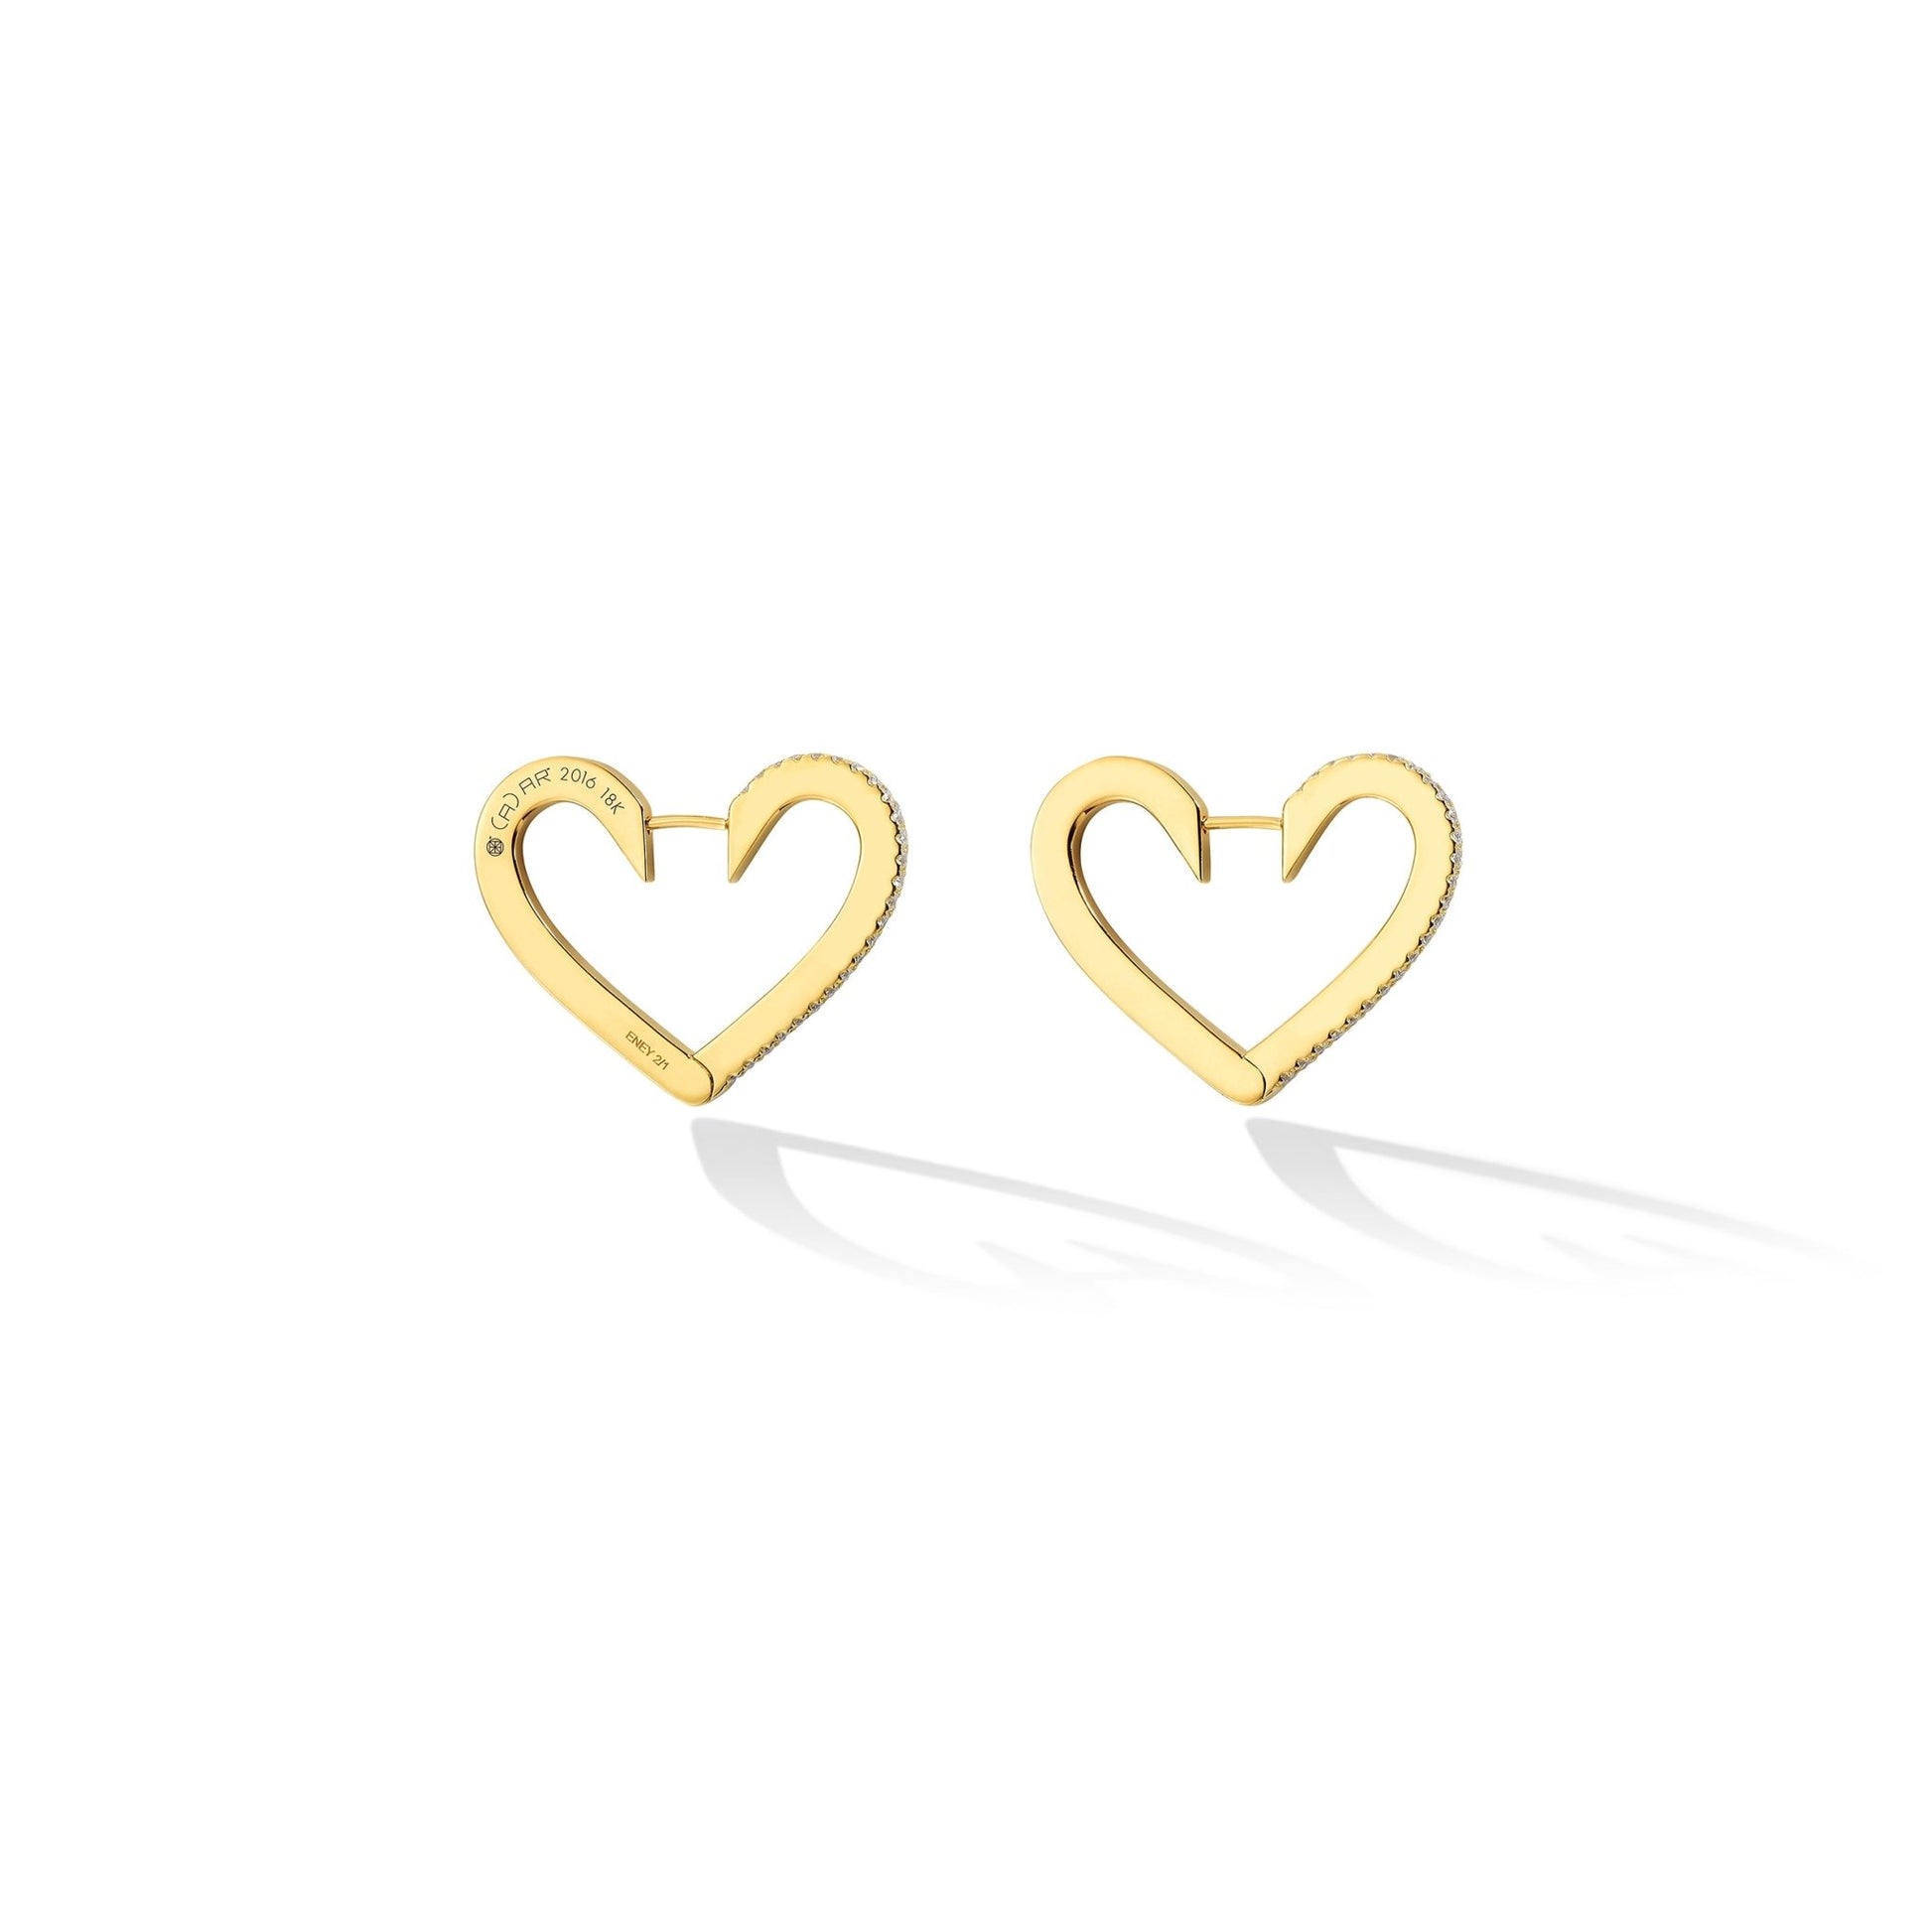 Medium Yellow Gold Endless Hoop Earrings with White Diamonds - Cadar